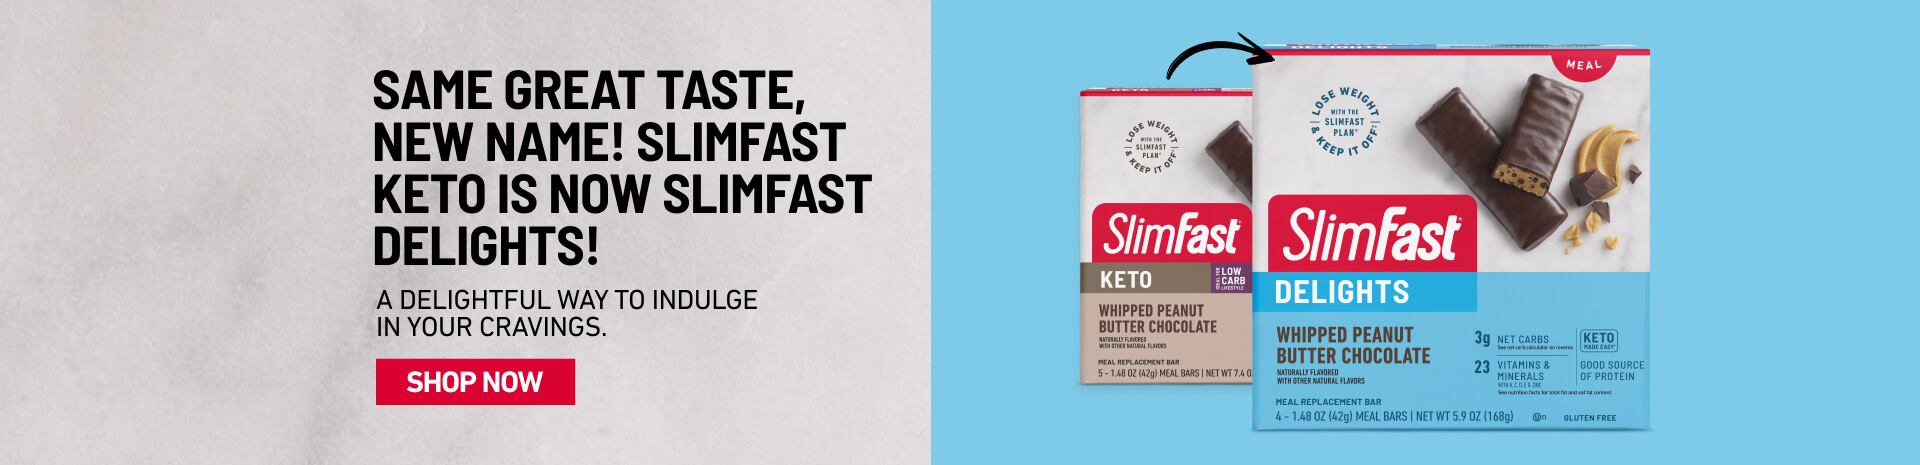 SlimFast Keto is now SlimFast Delights